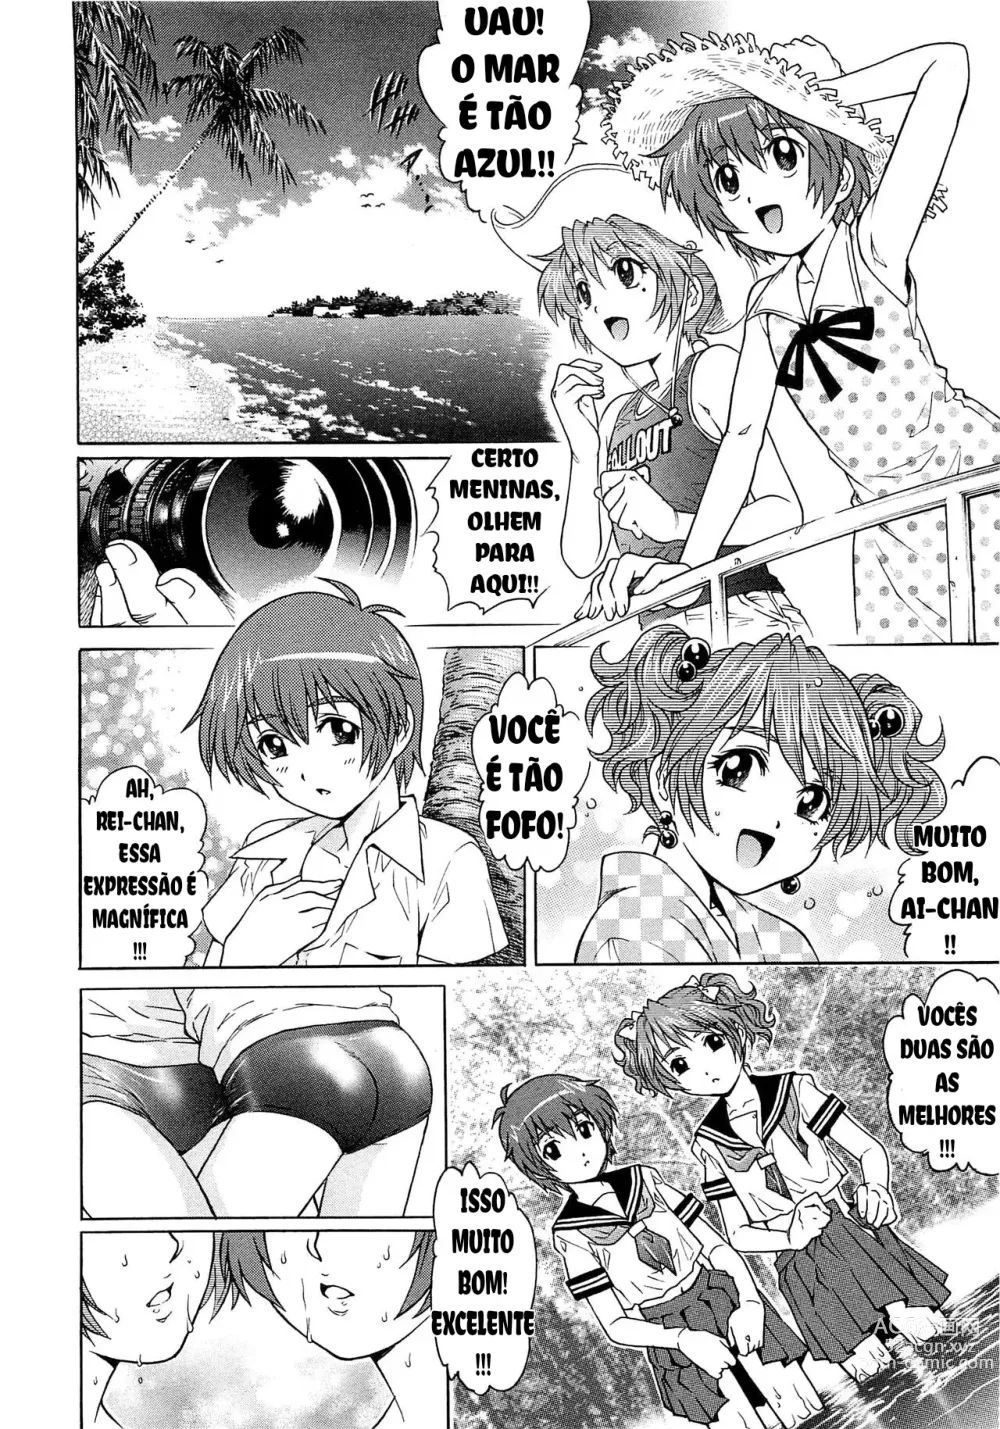 Page 6 of manga IdolMaster-bation